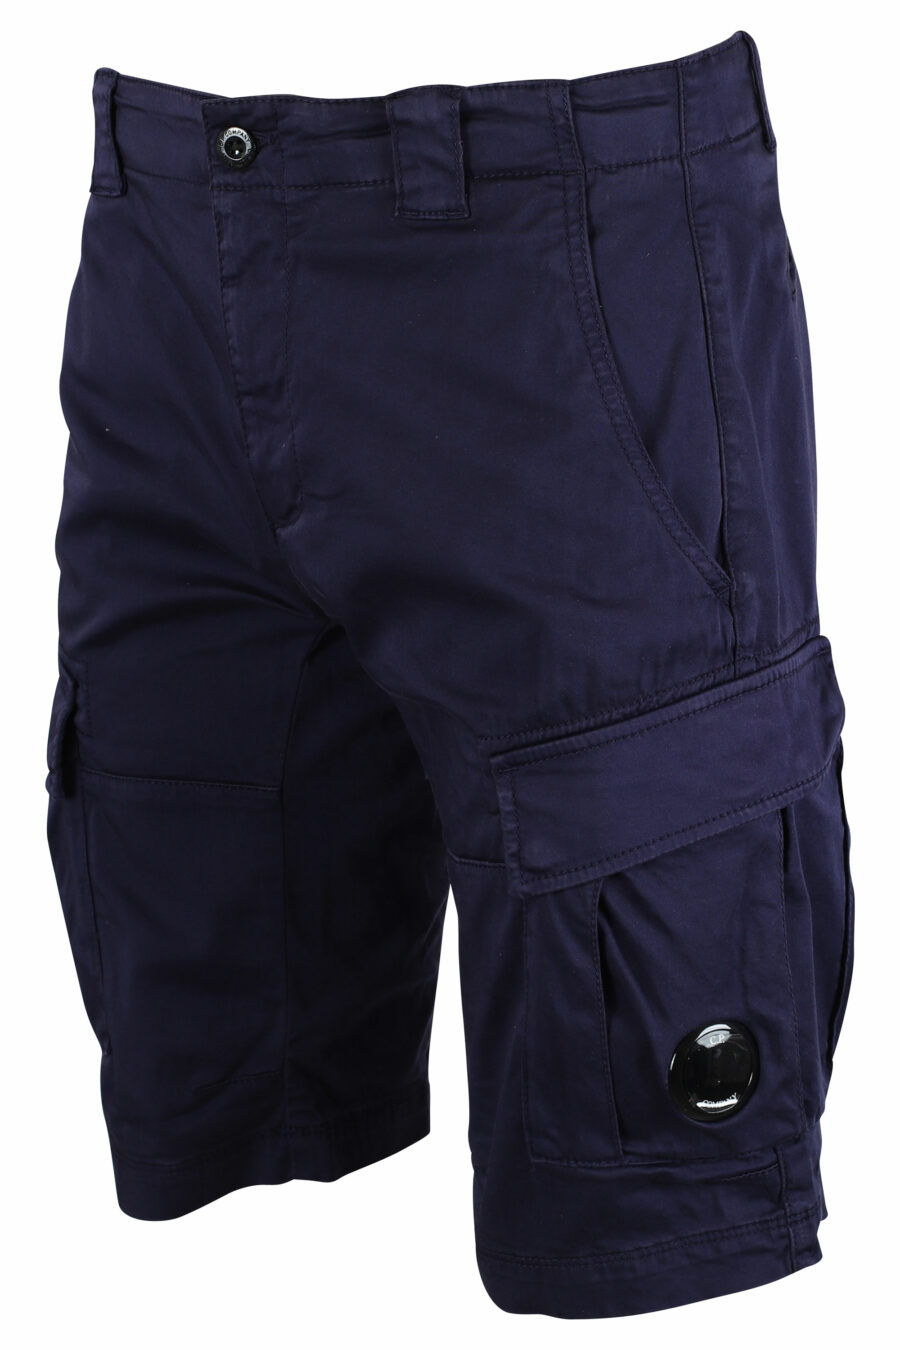 Dunkelblaue Cargo-Shorts mit rundem Mini-Logo - IMG 9490